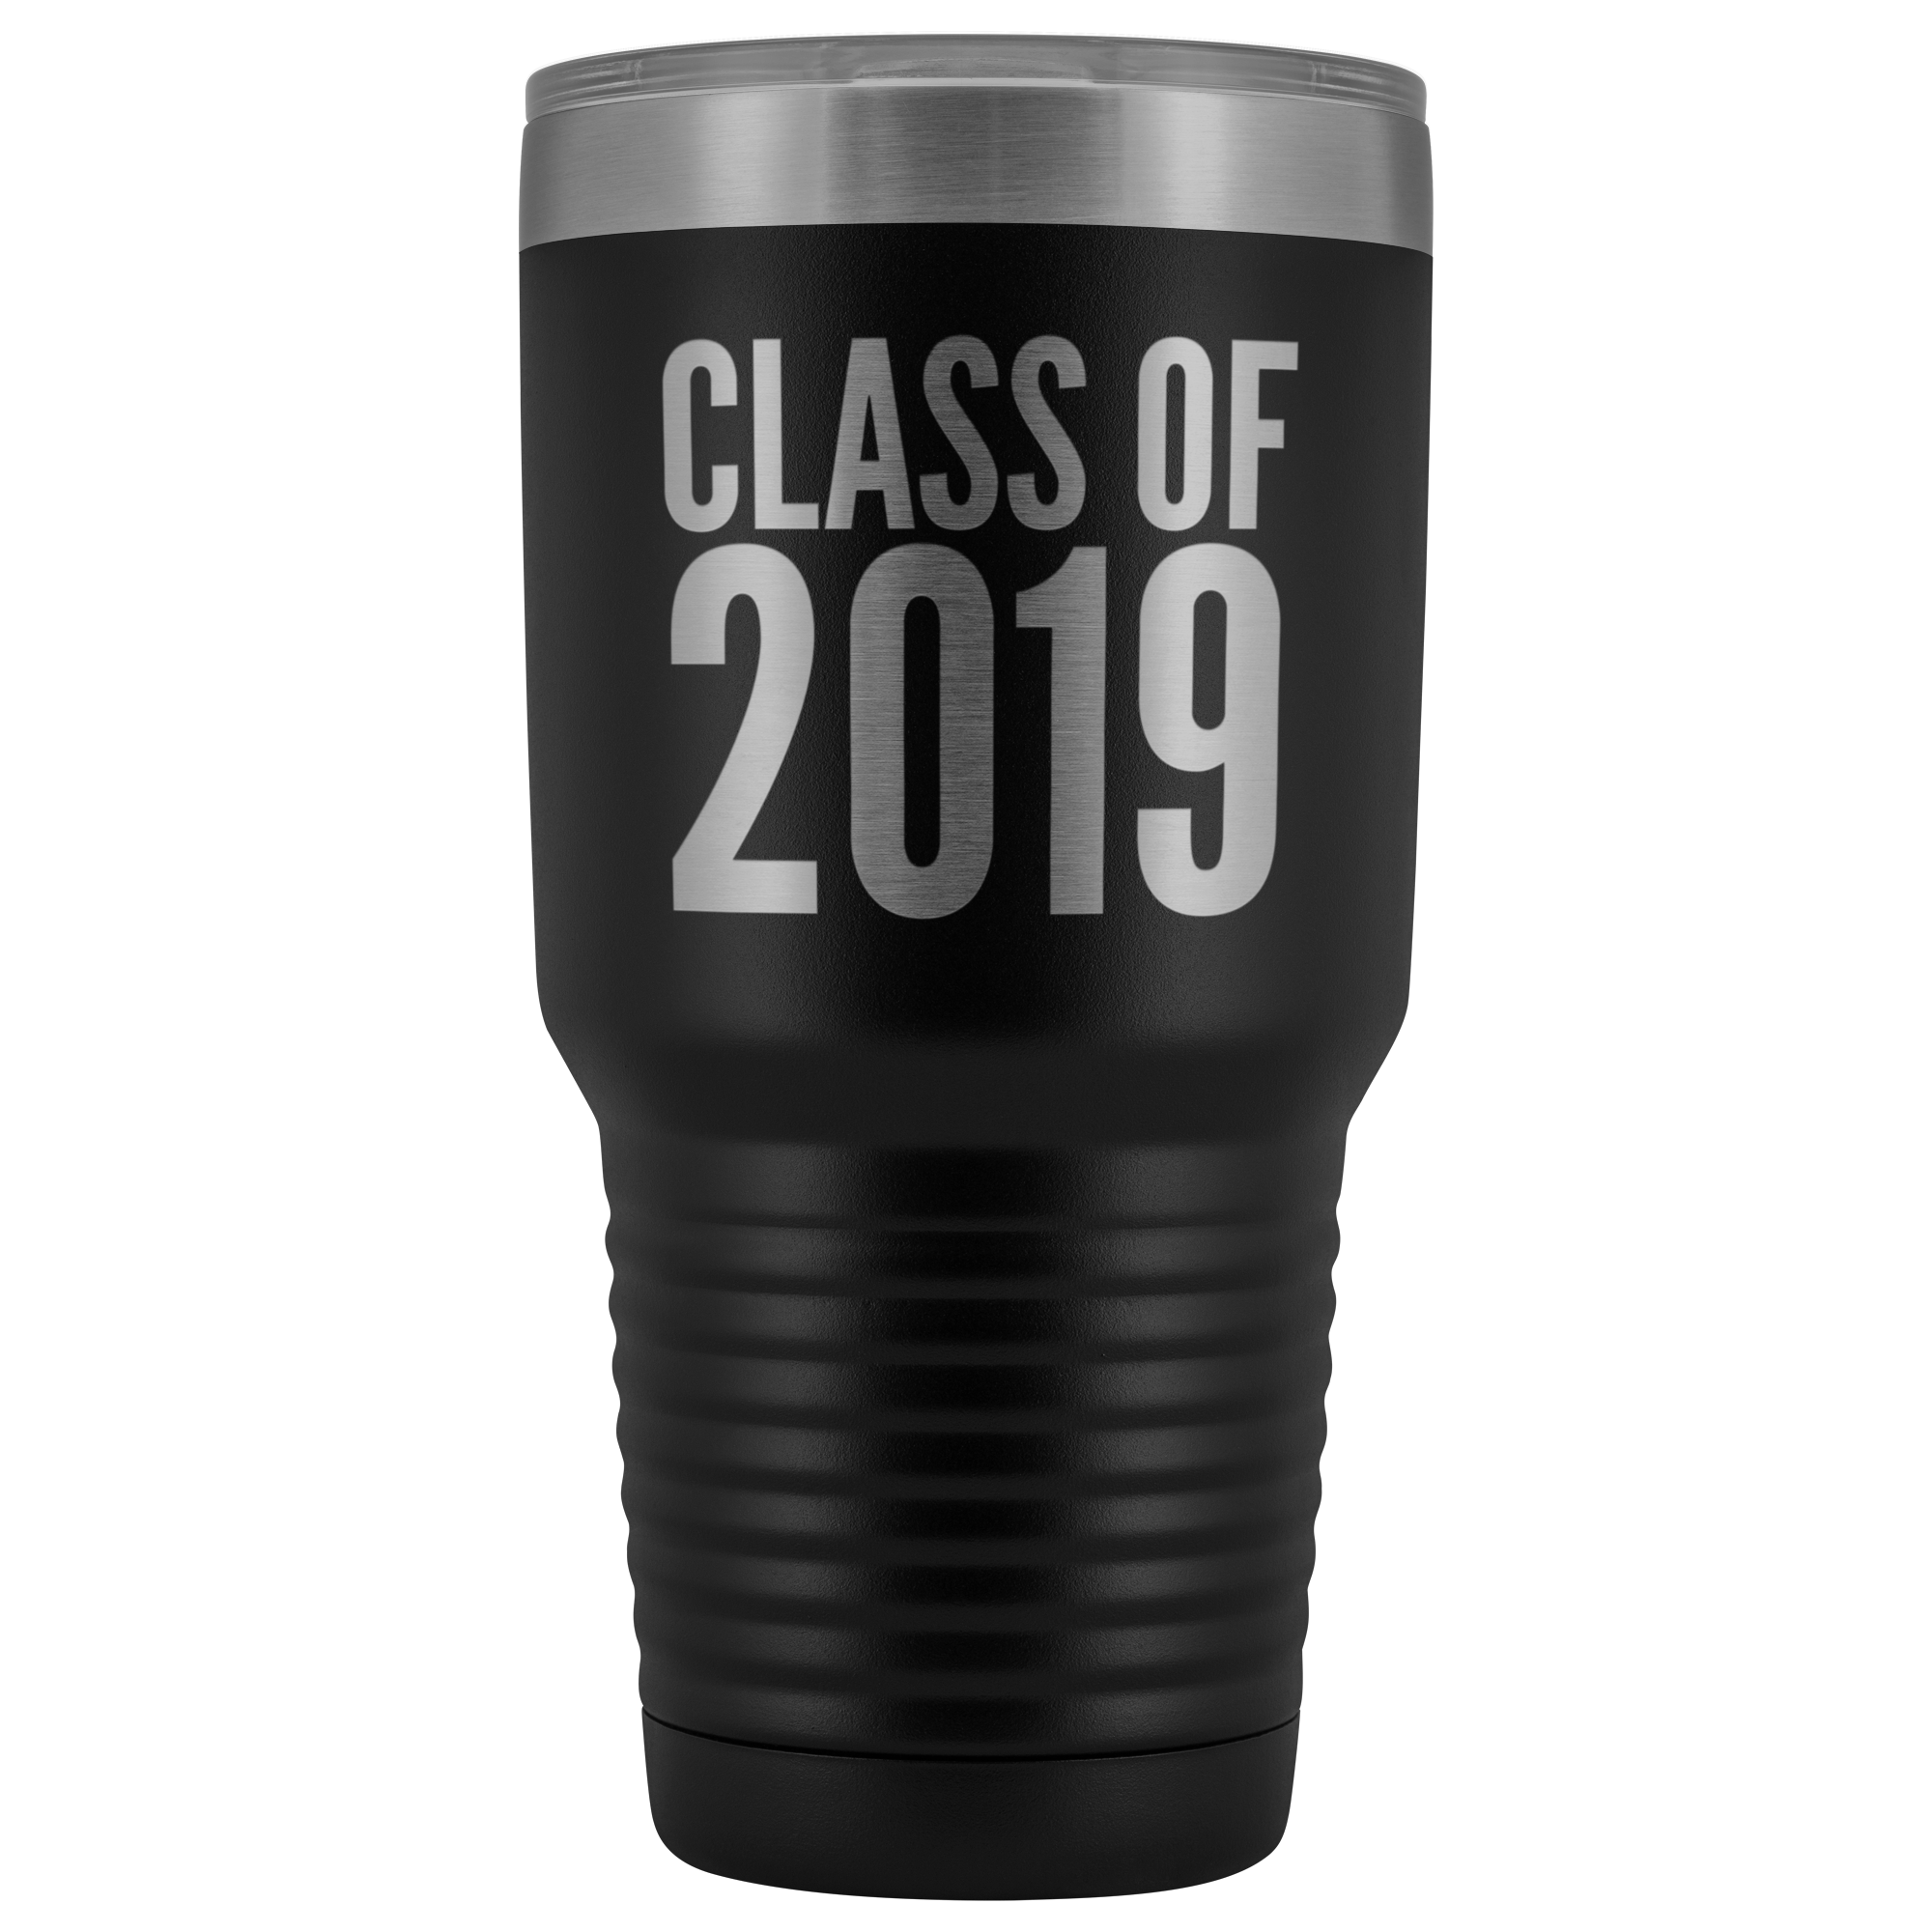 Class of 2019 Graduation Tumbler Metal Mug Insulated Hot Cold Travel Coffee Cup 30oz BPA Free